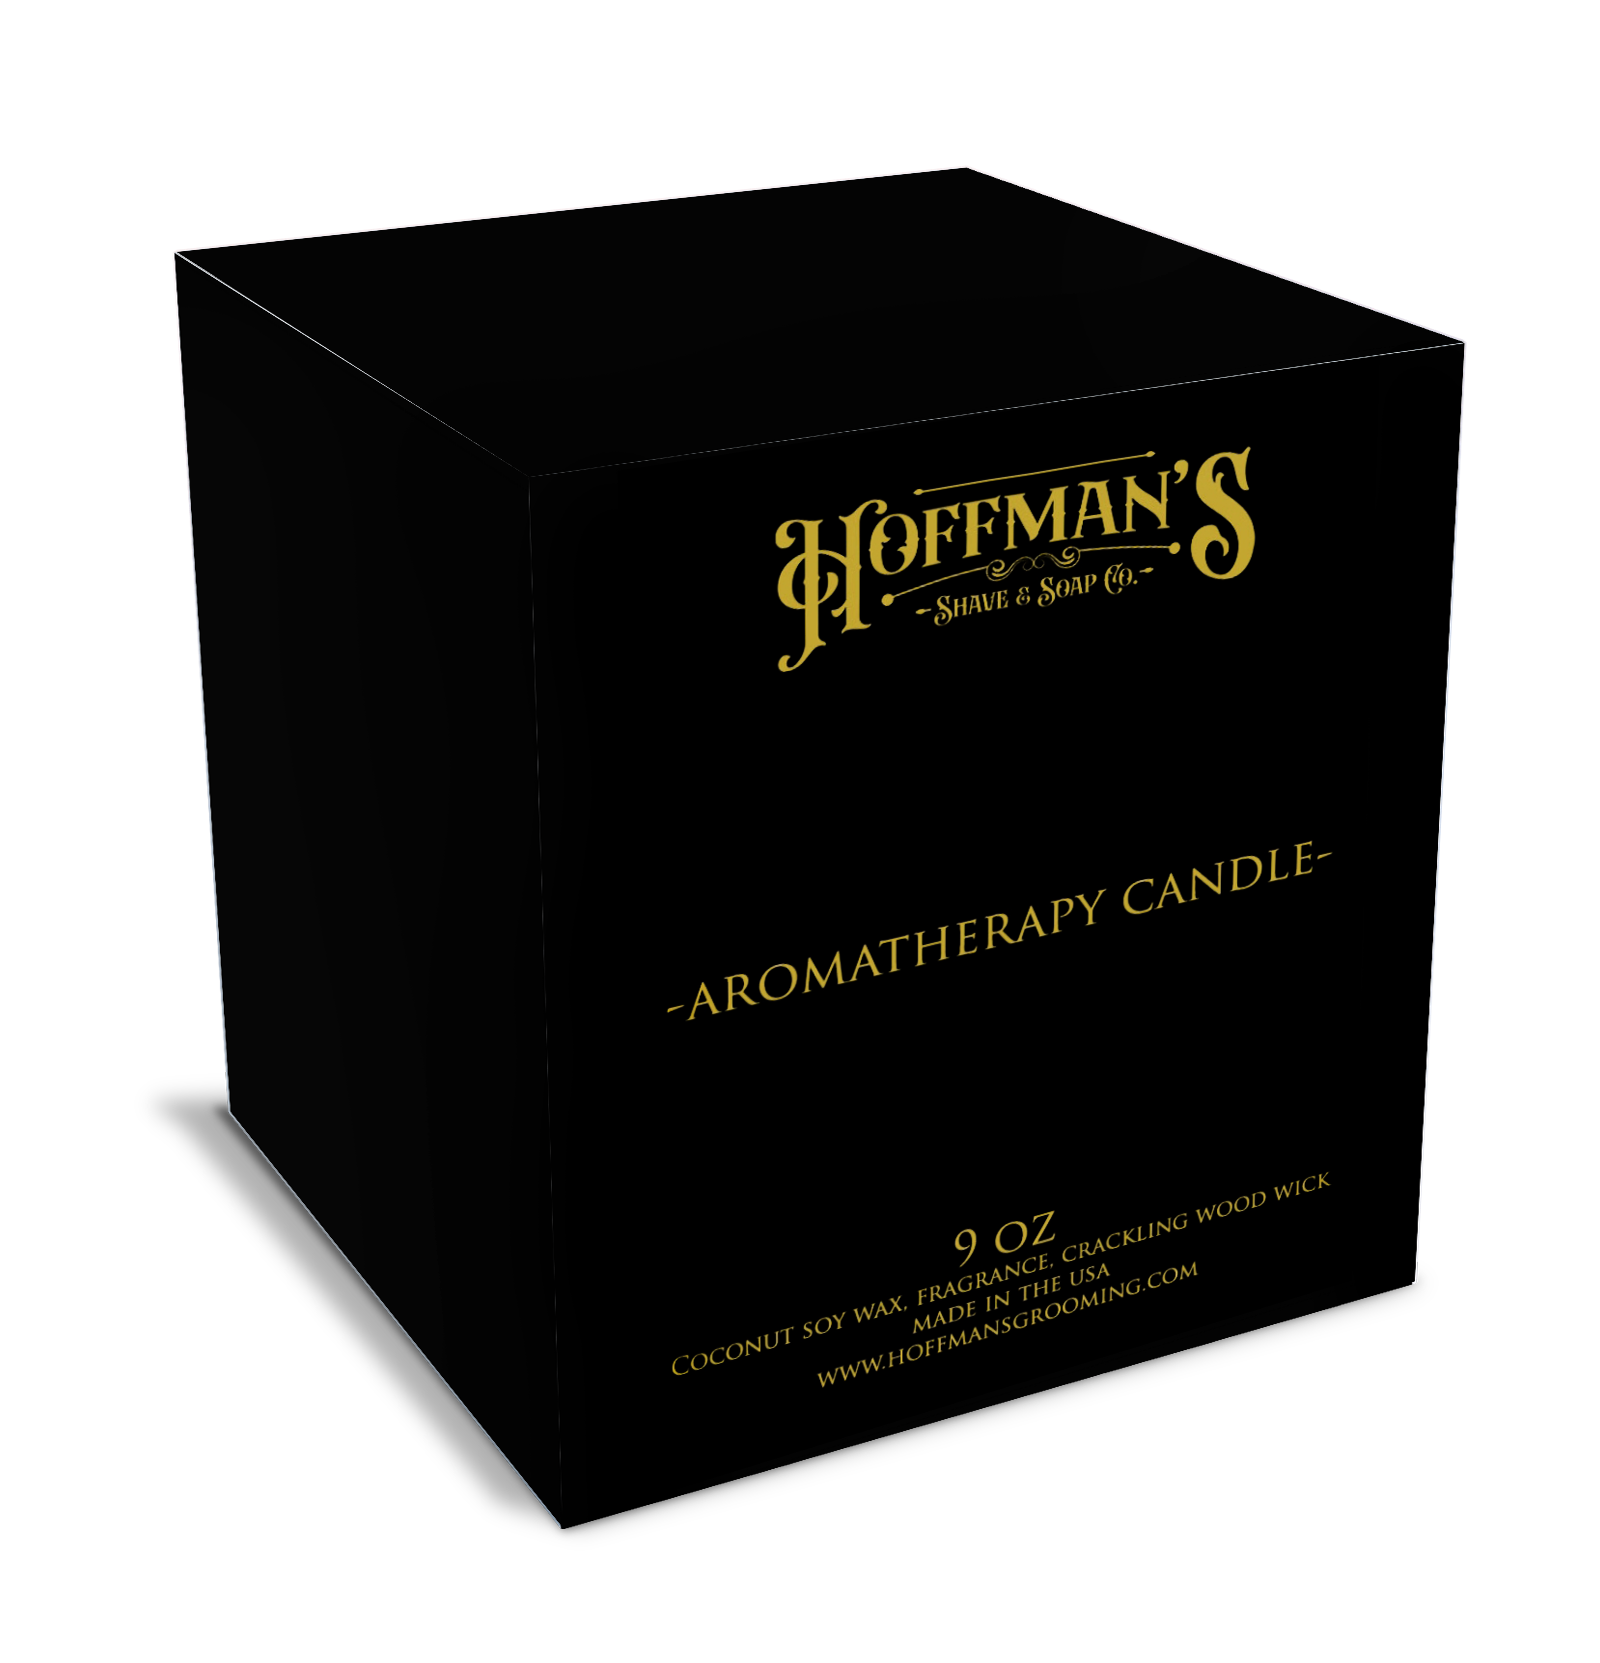 Dogfight 9oz Aromatherapy Candle Box